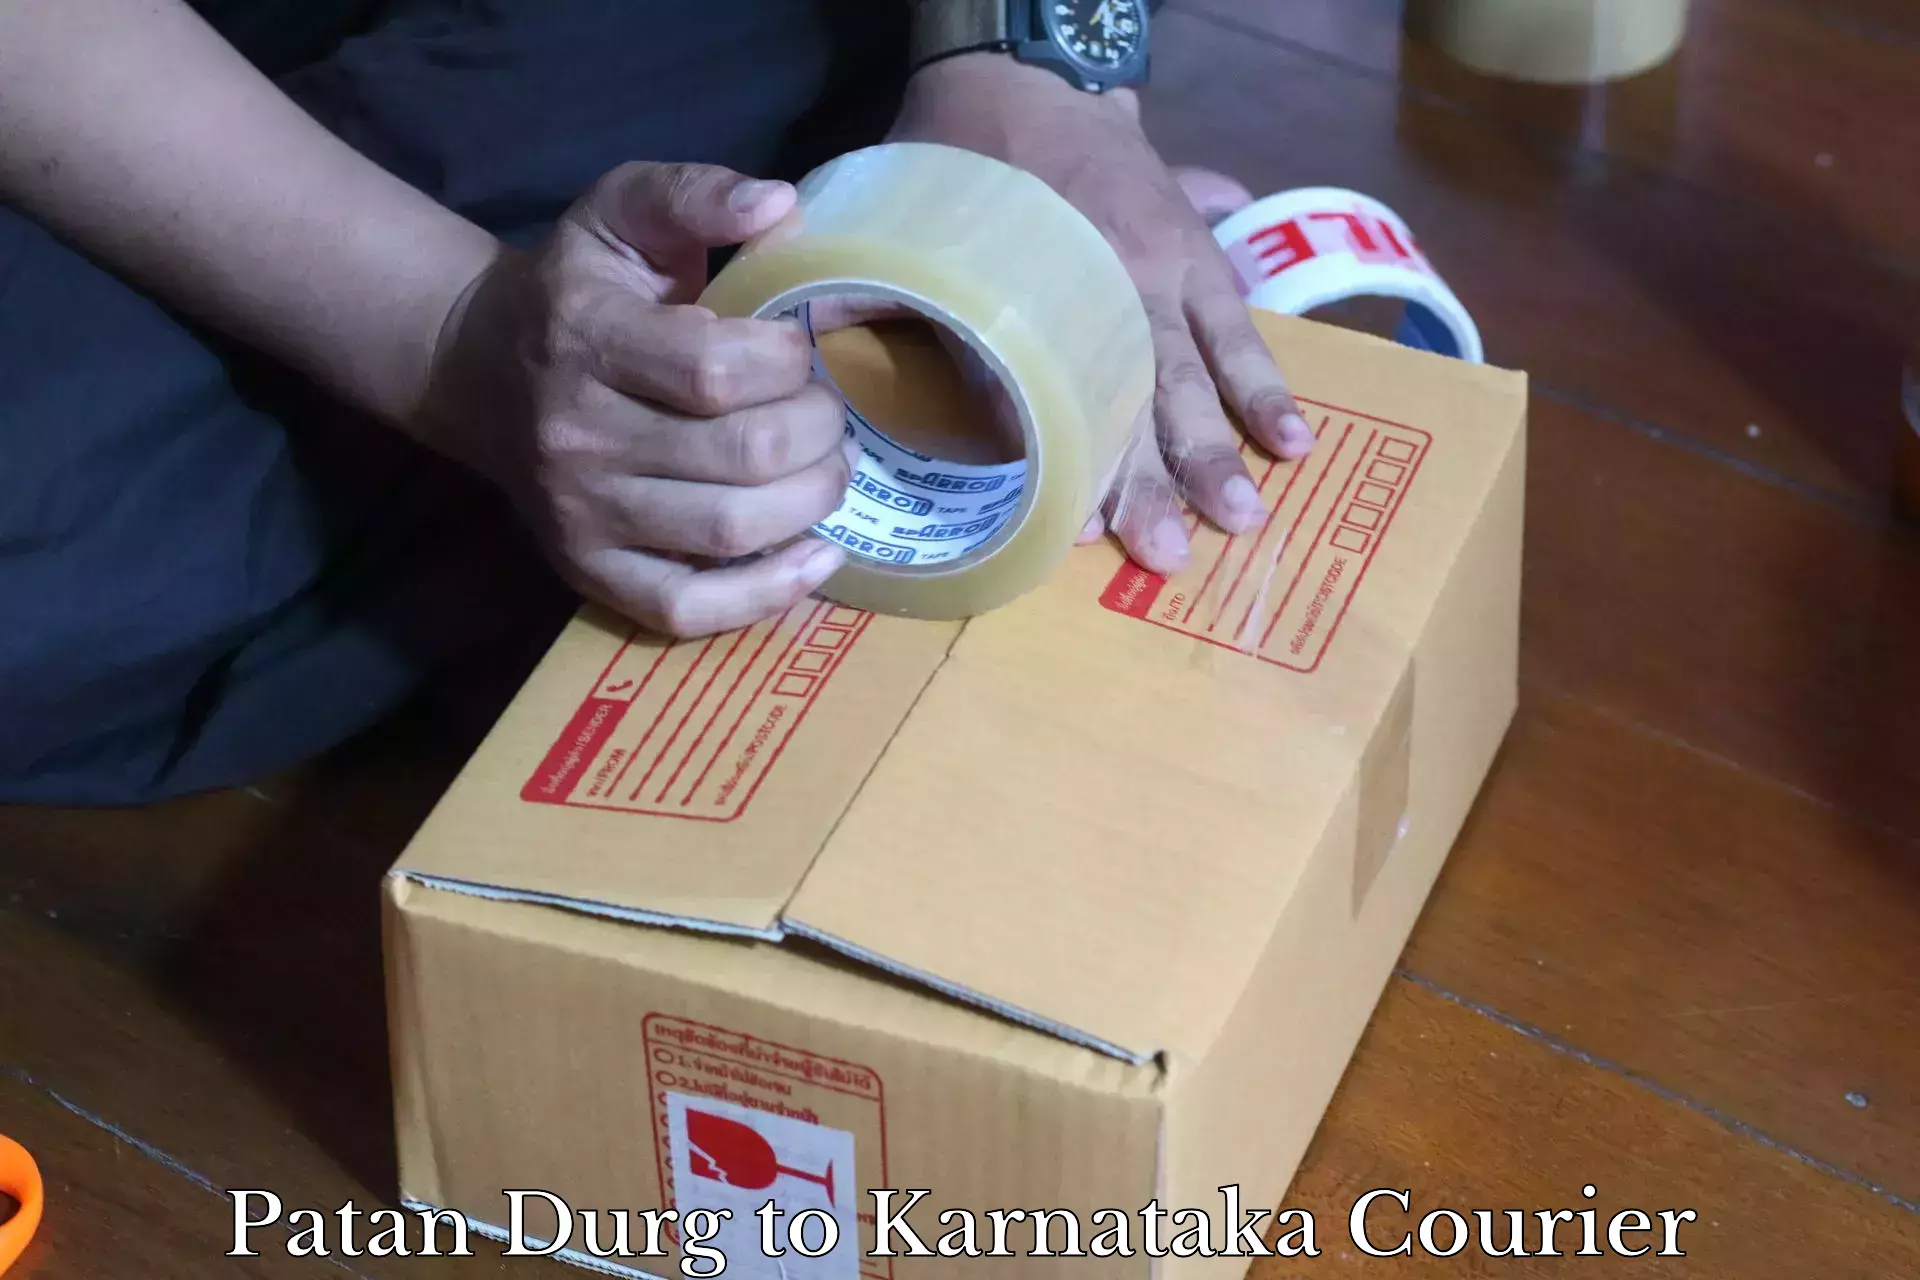 International parcel service Patan Durg to Tavarekere